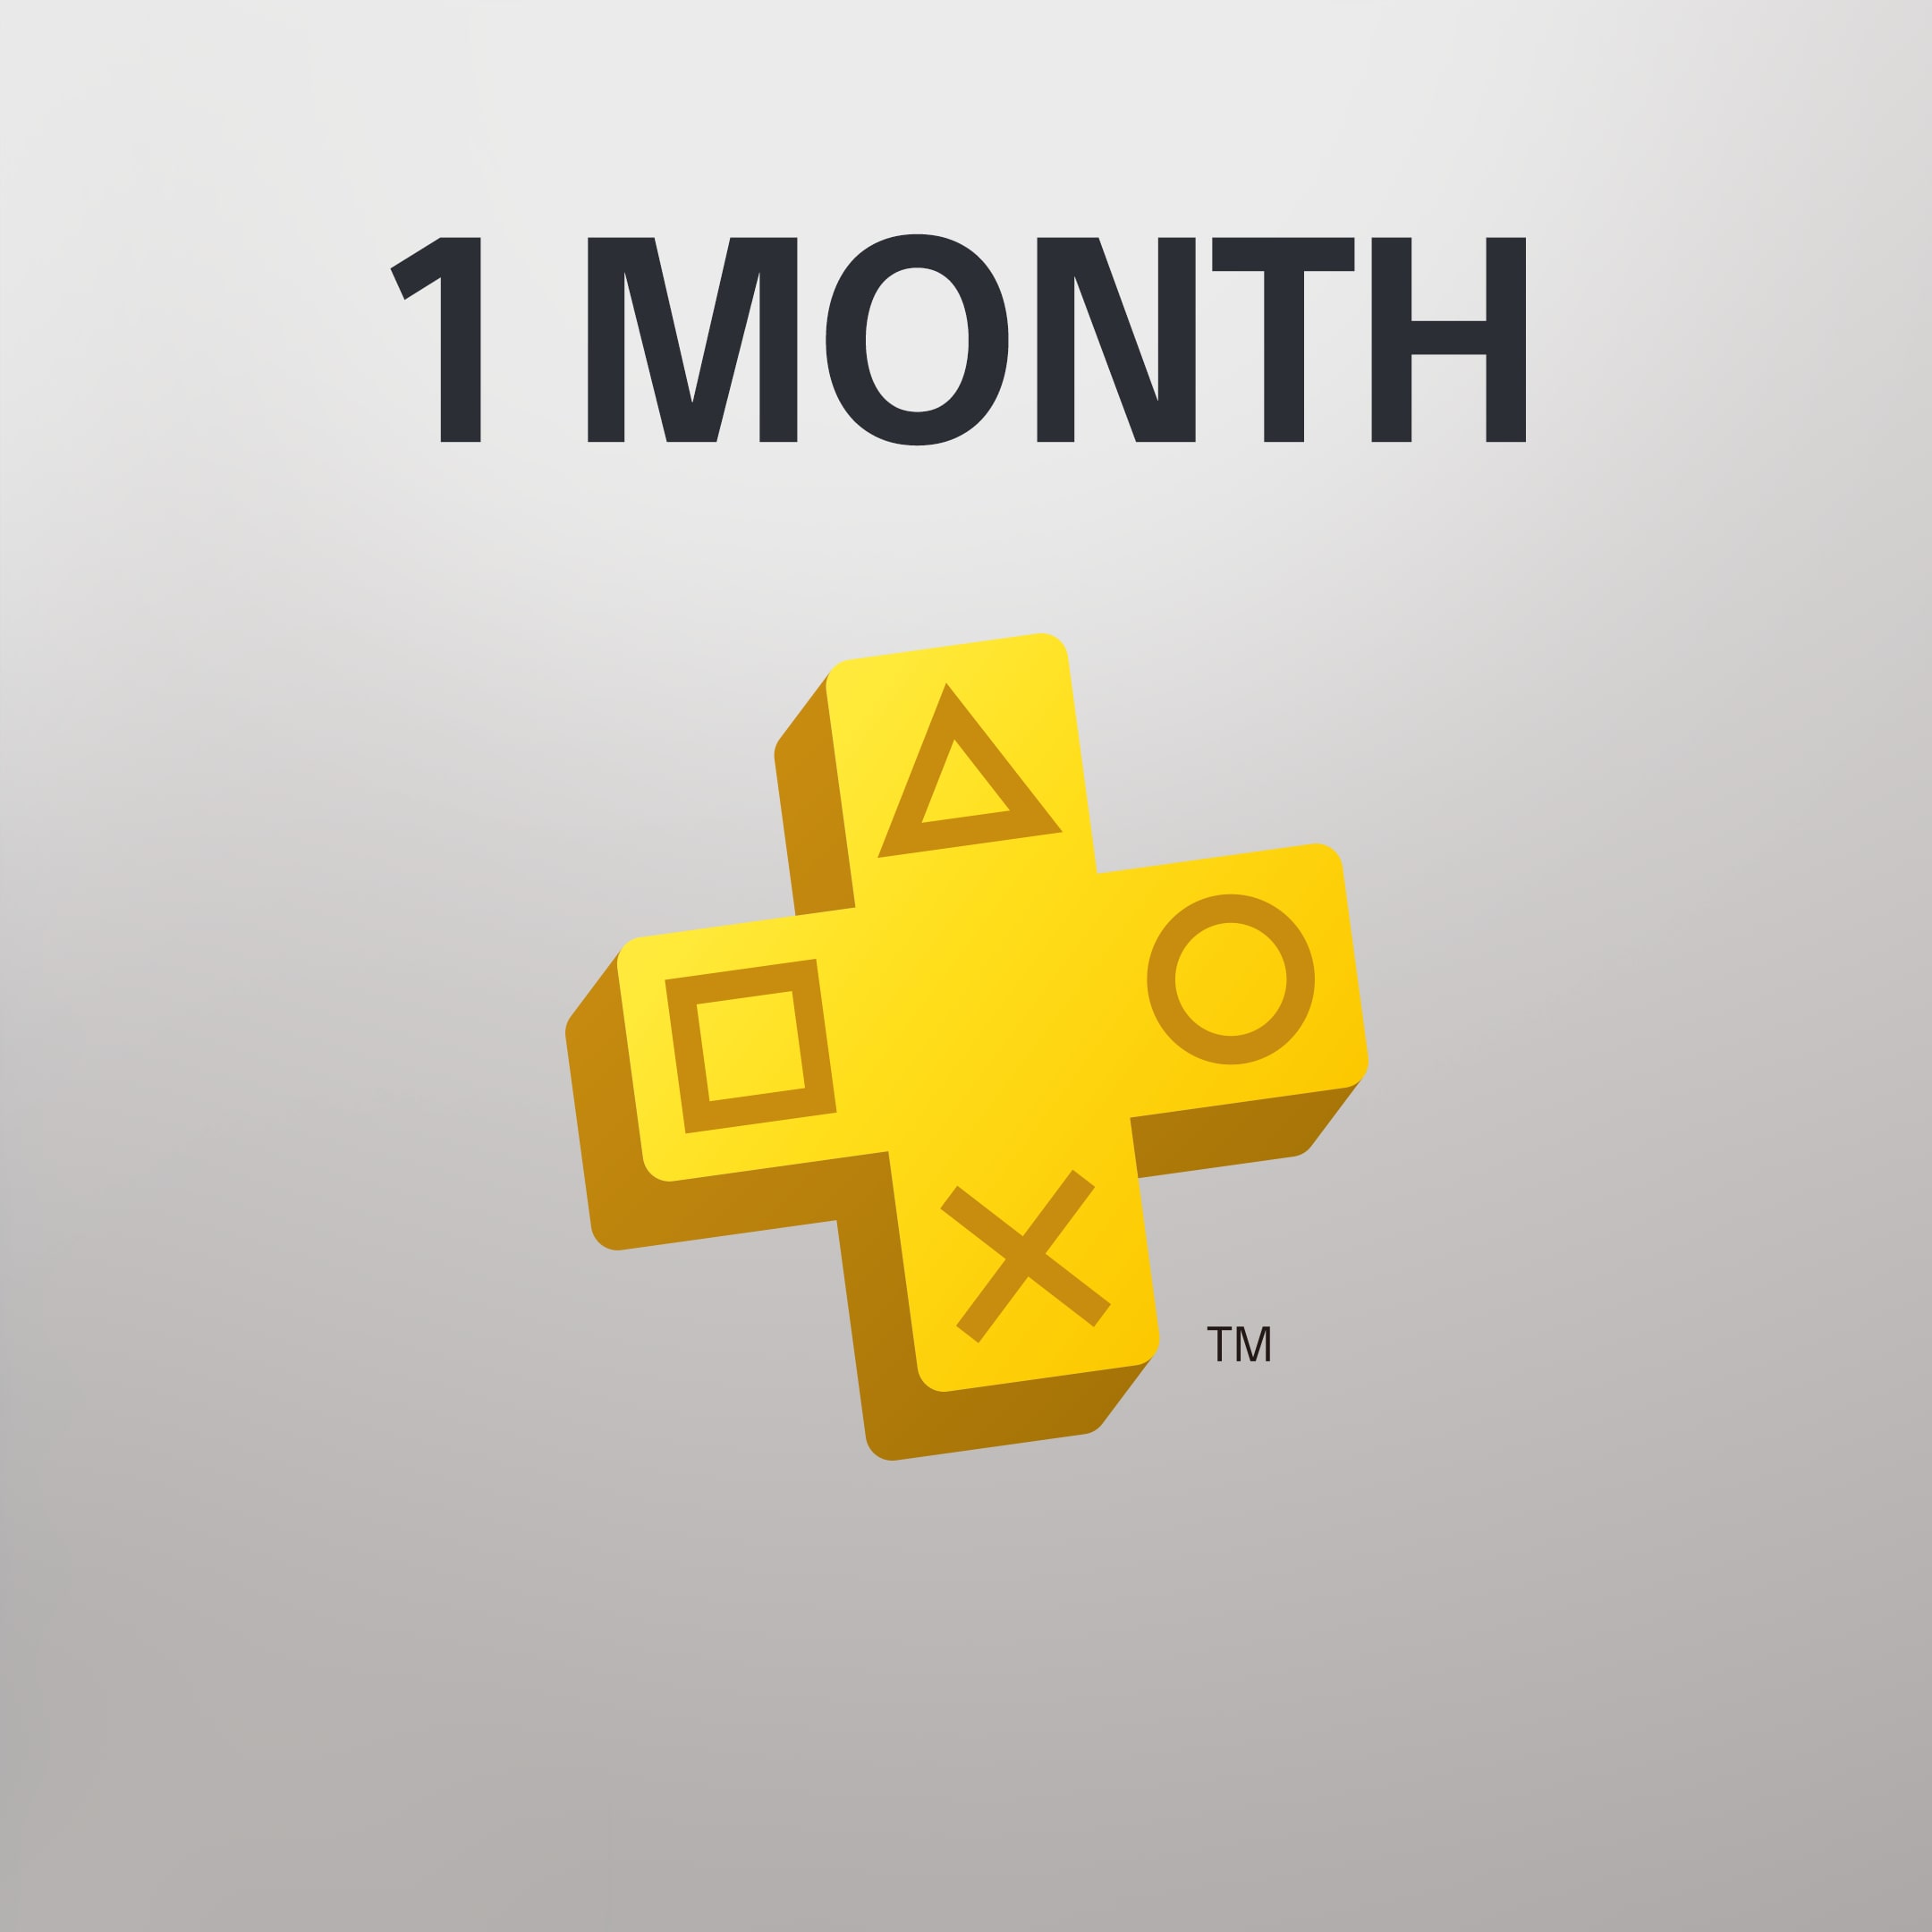 PlayStation Plus: 1 Month Membership